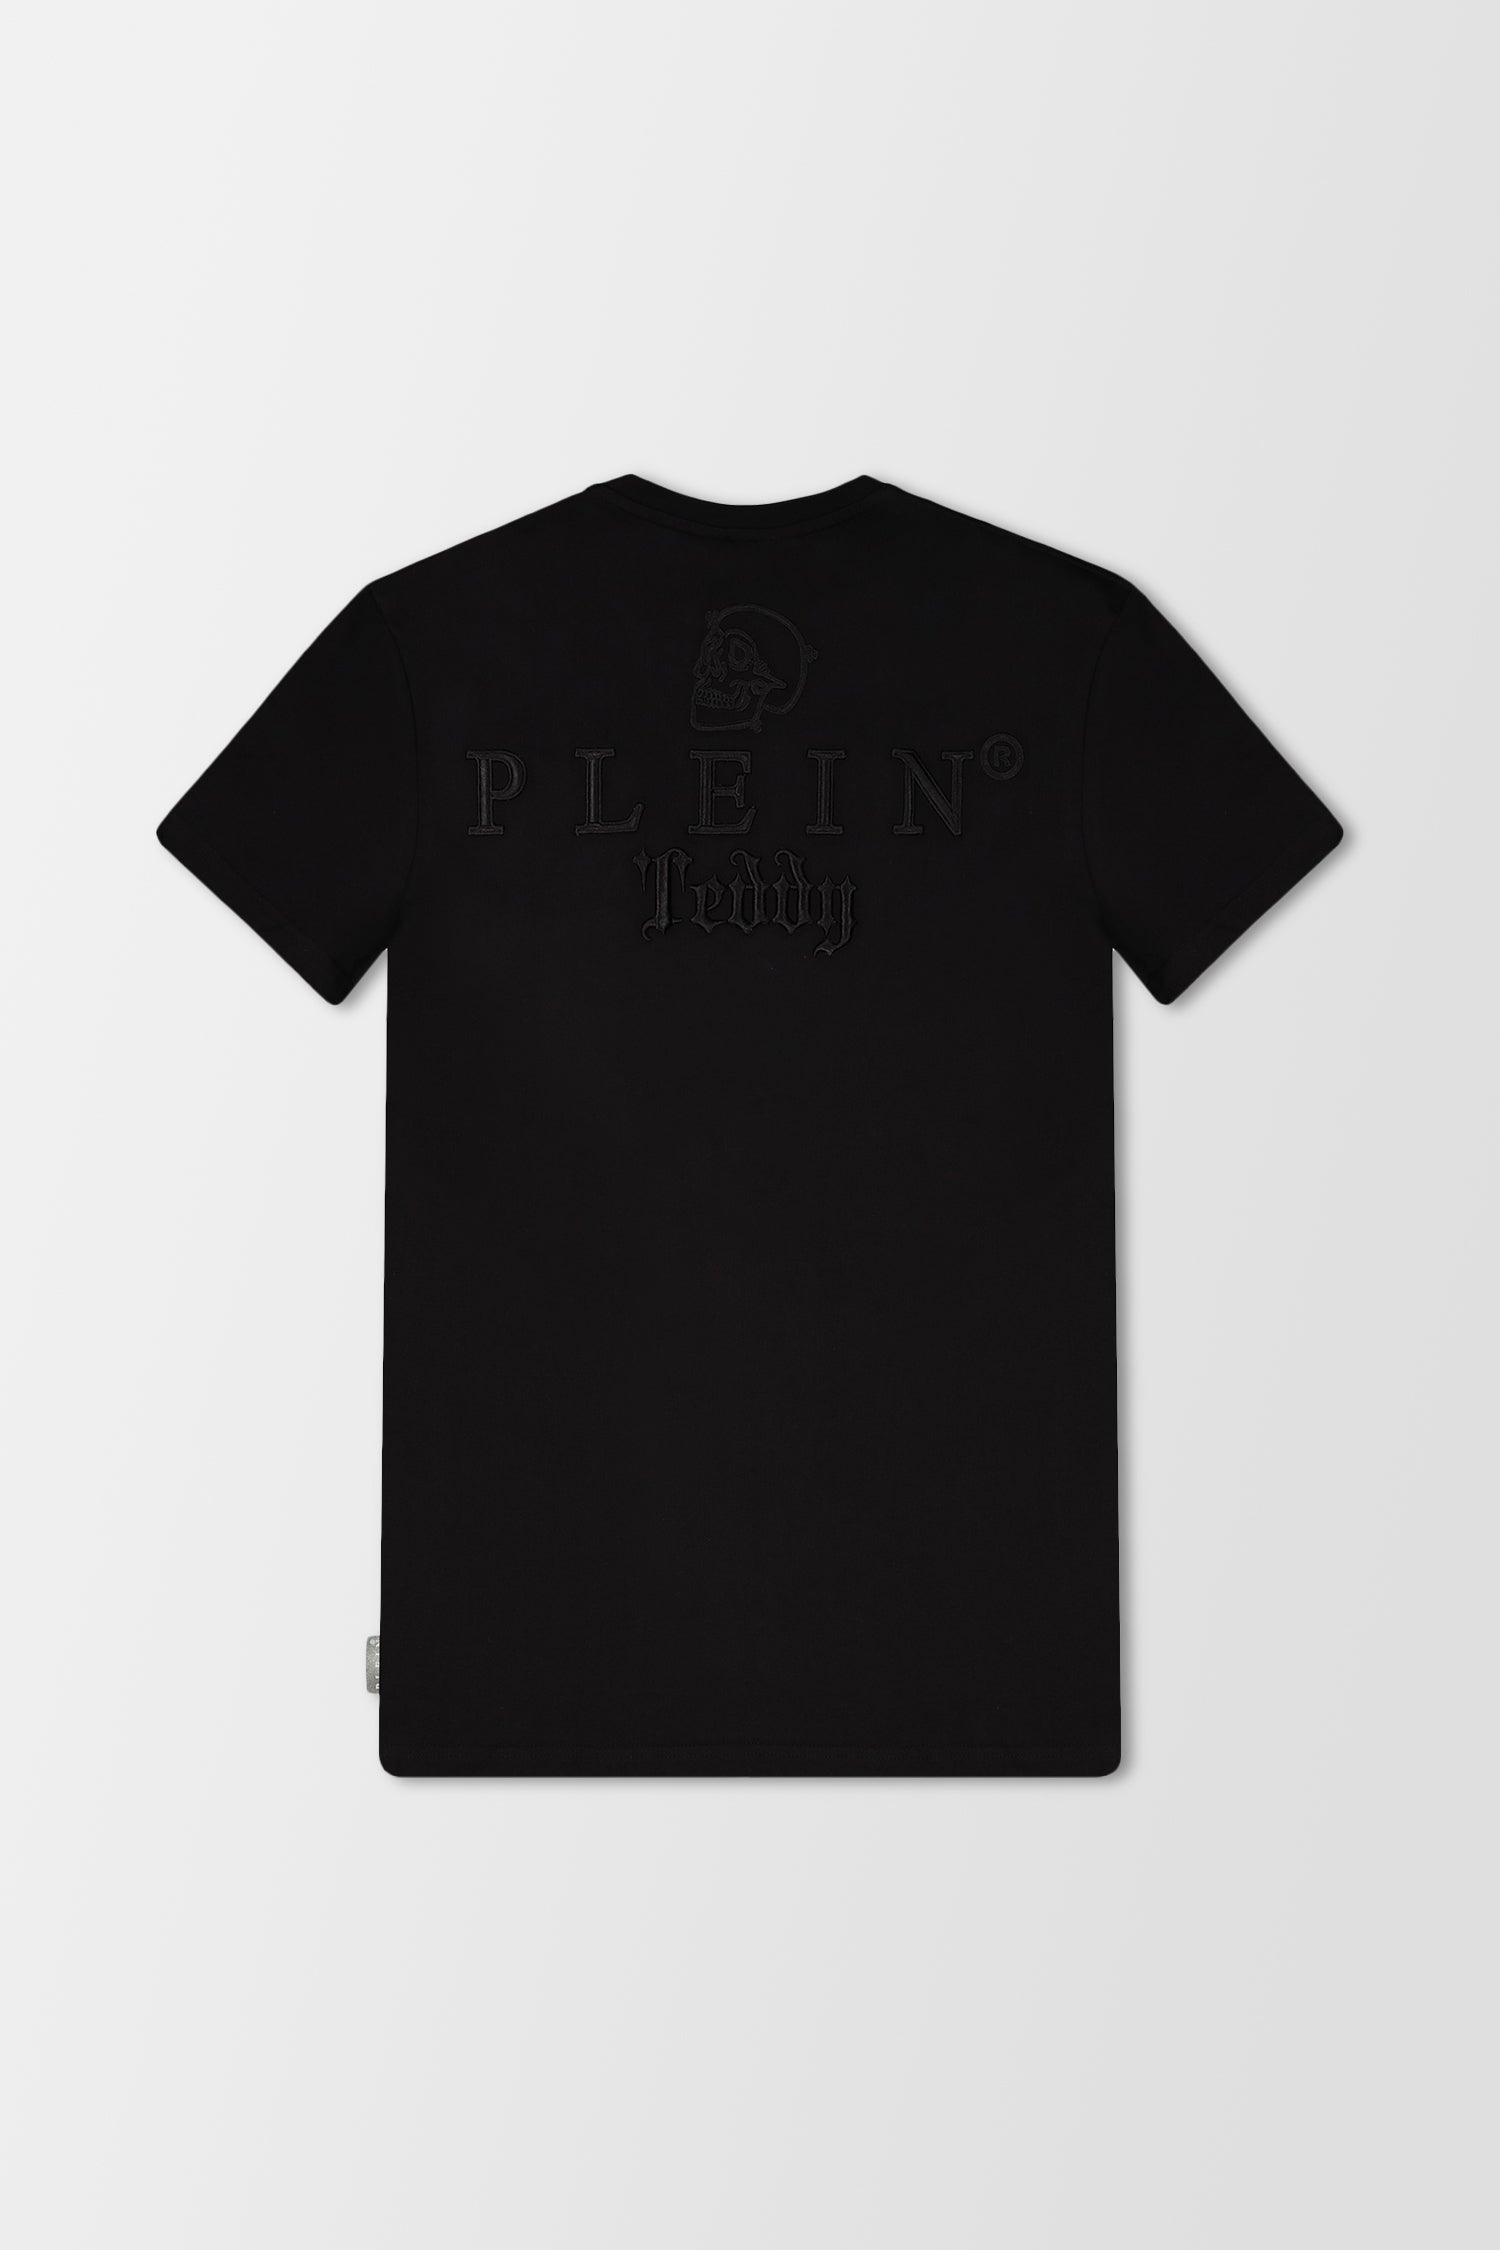 Philipp Plein Black/Multicolour Round Neck SS Teddy Bear T-Shirt